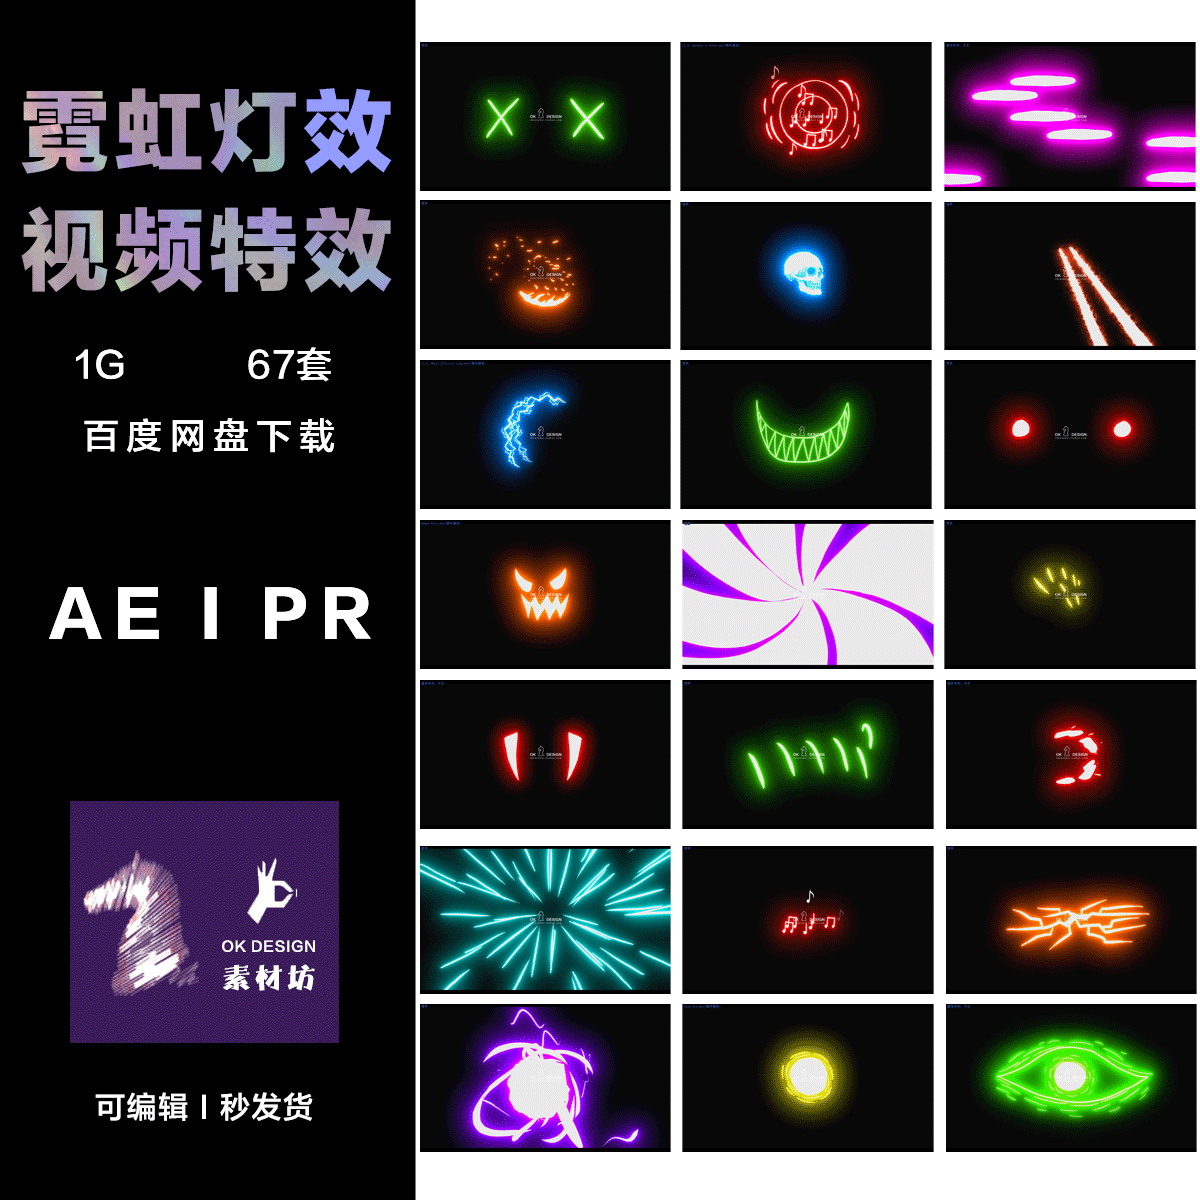 AE I PR特效视频 黑色背景 LED霓虹灯光效果各式设计图案叠加元素